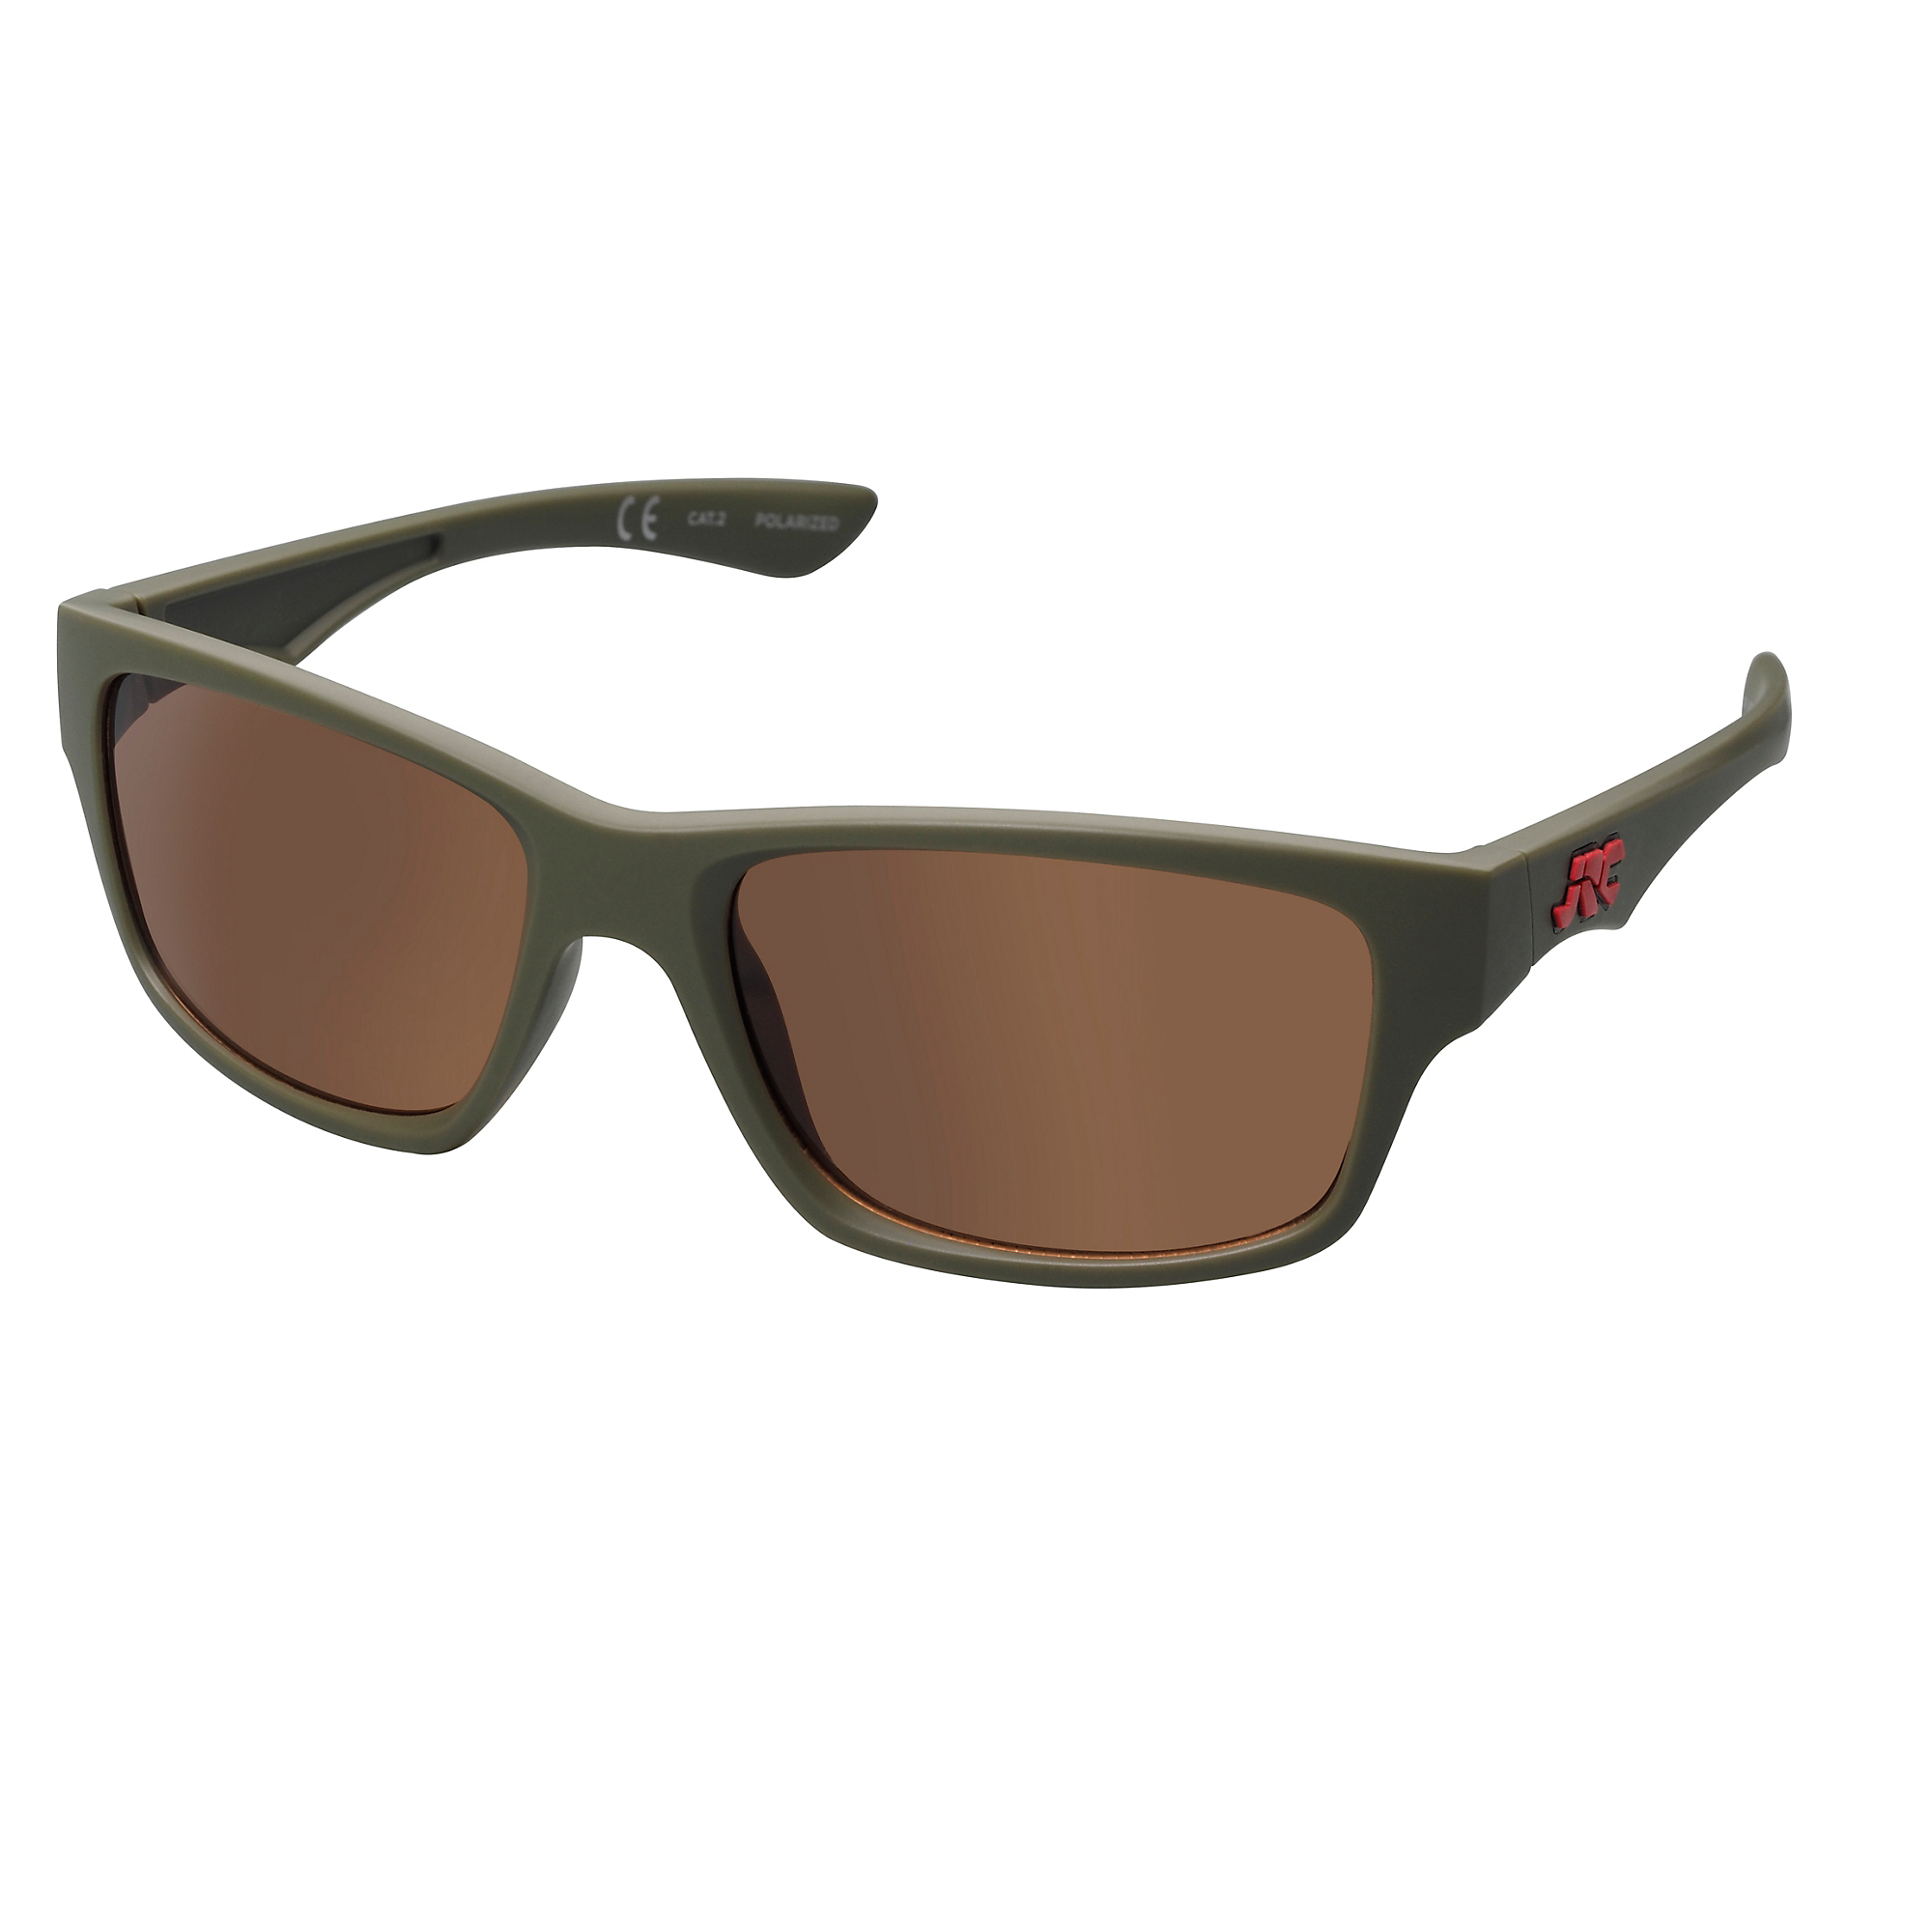 JRC Stealth Sunglasses - Matt Moss - Copper